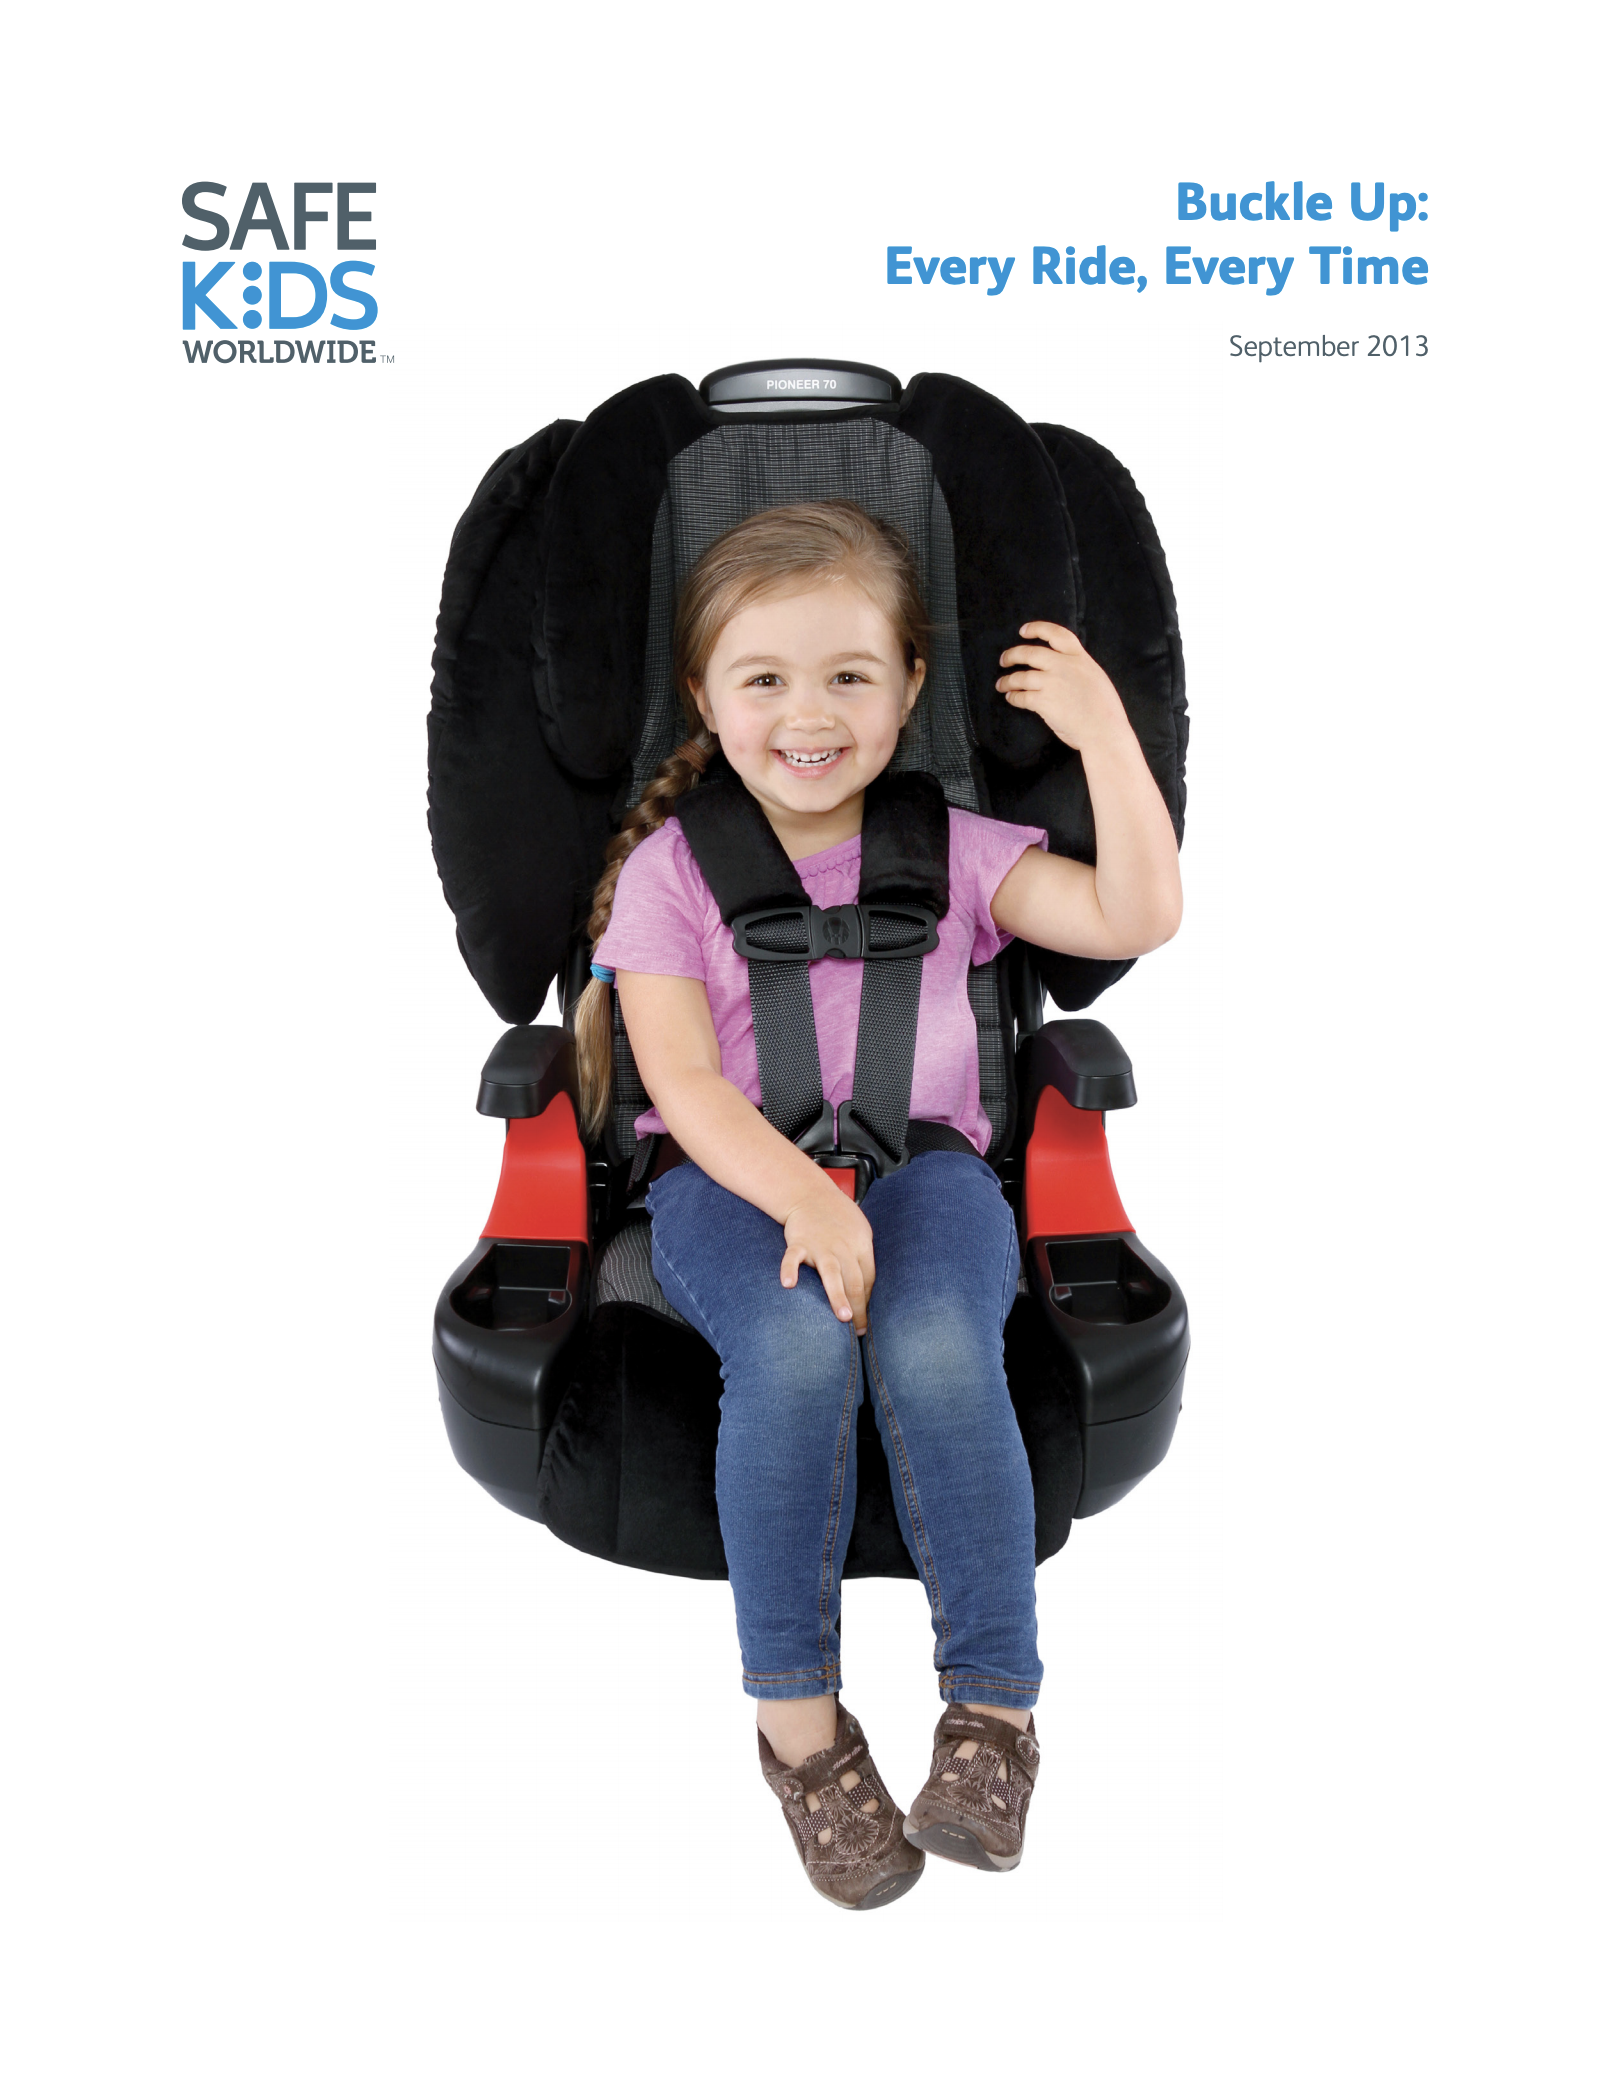 Do You Always Buckle Up Your Kids? (September 2013) | Safe Kids Worldwide